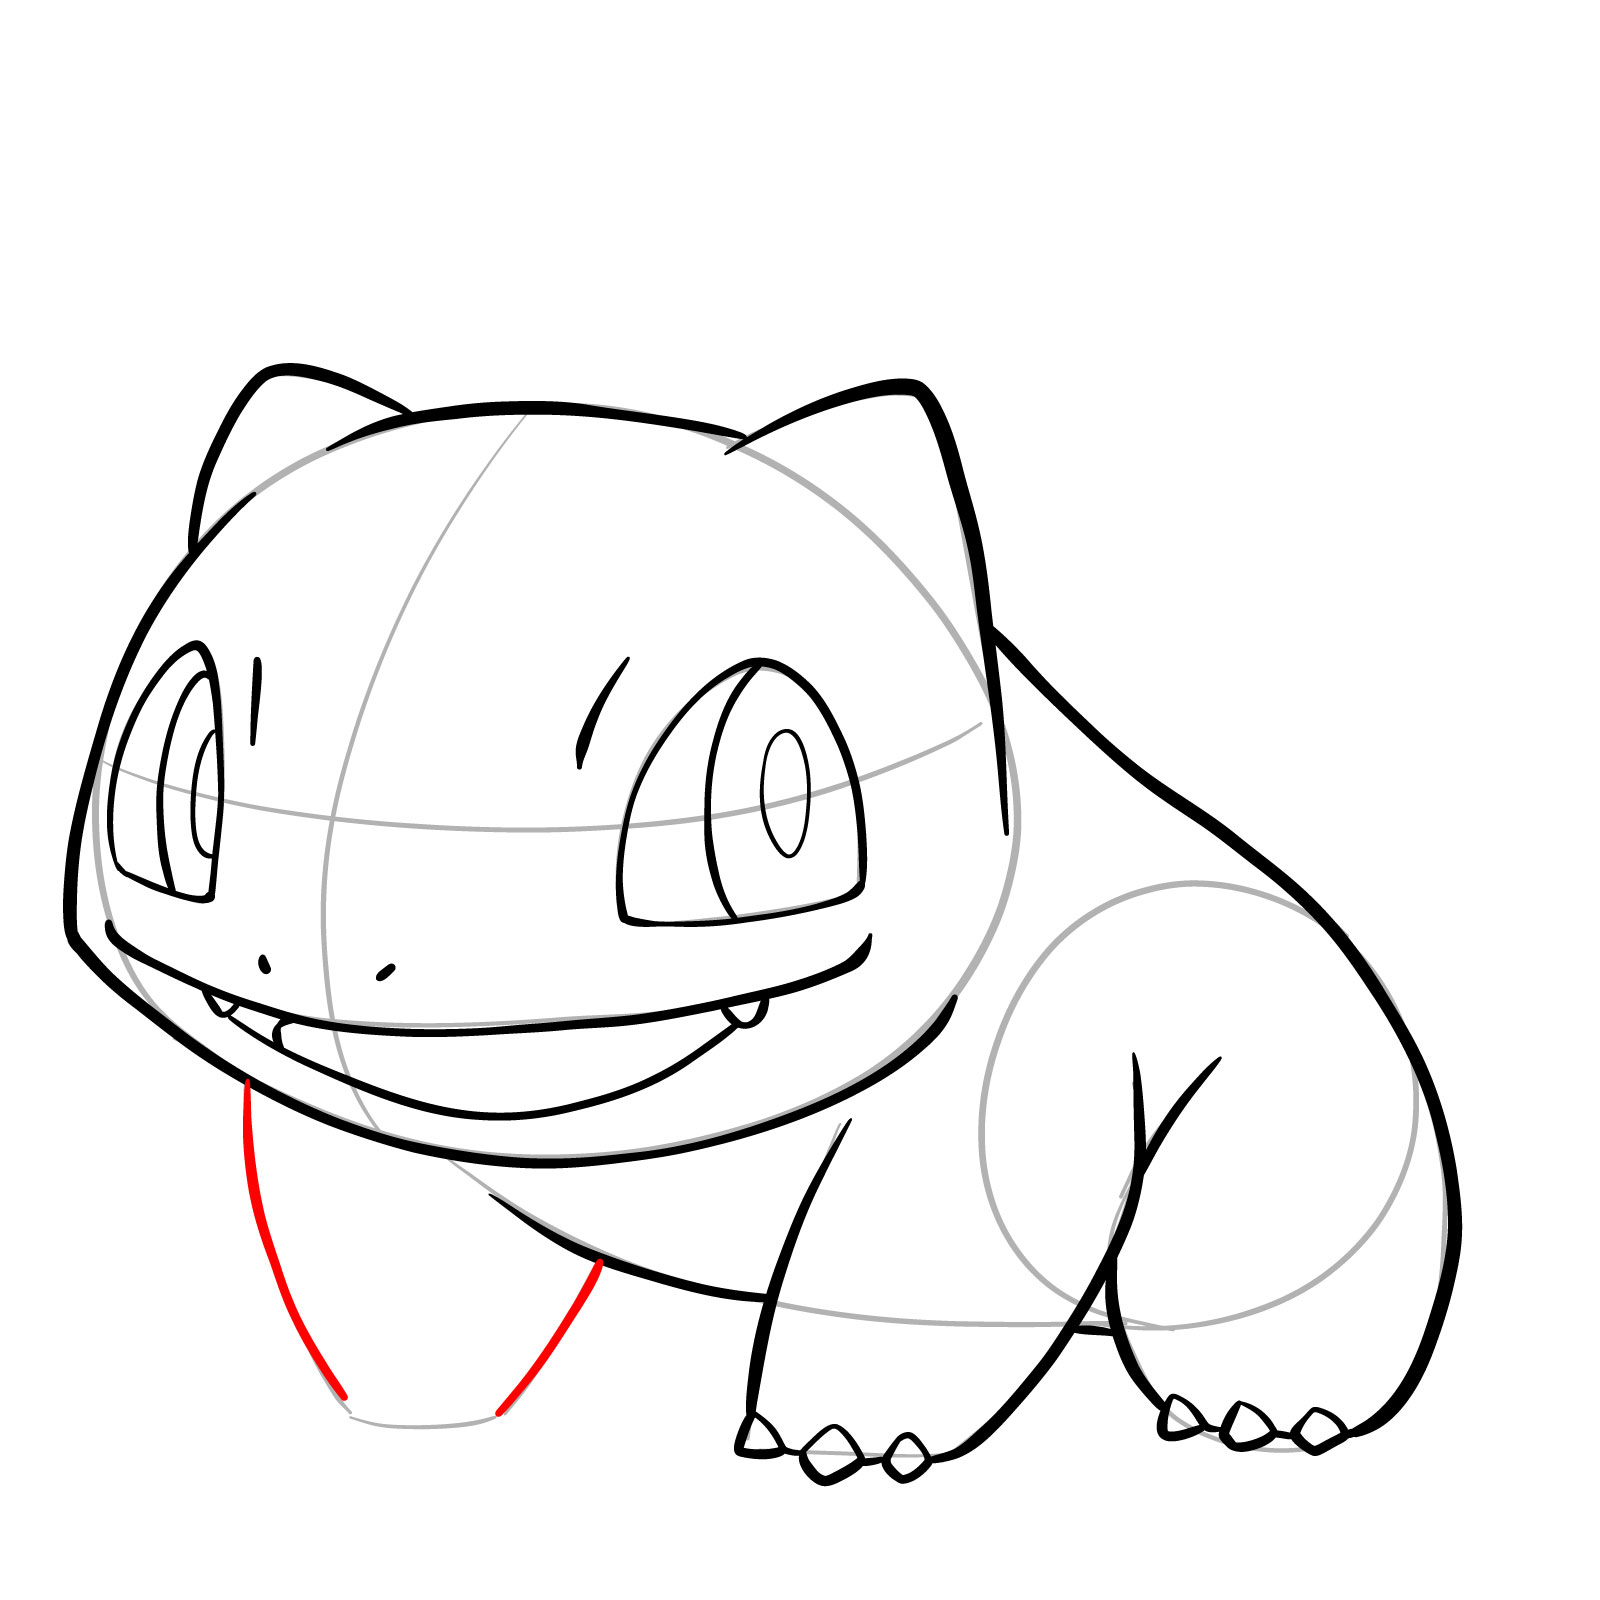 How to draw Bulbasaur - step 16